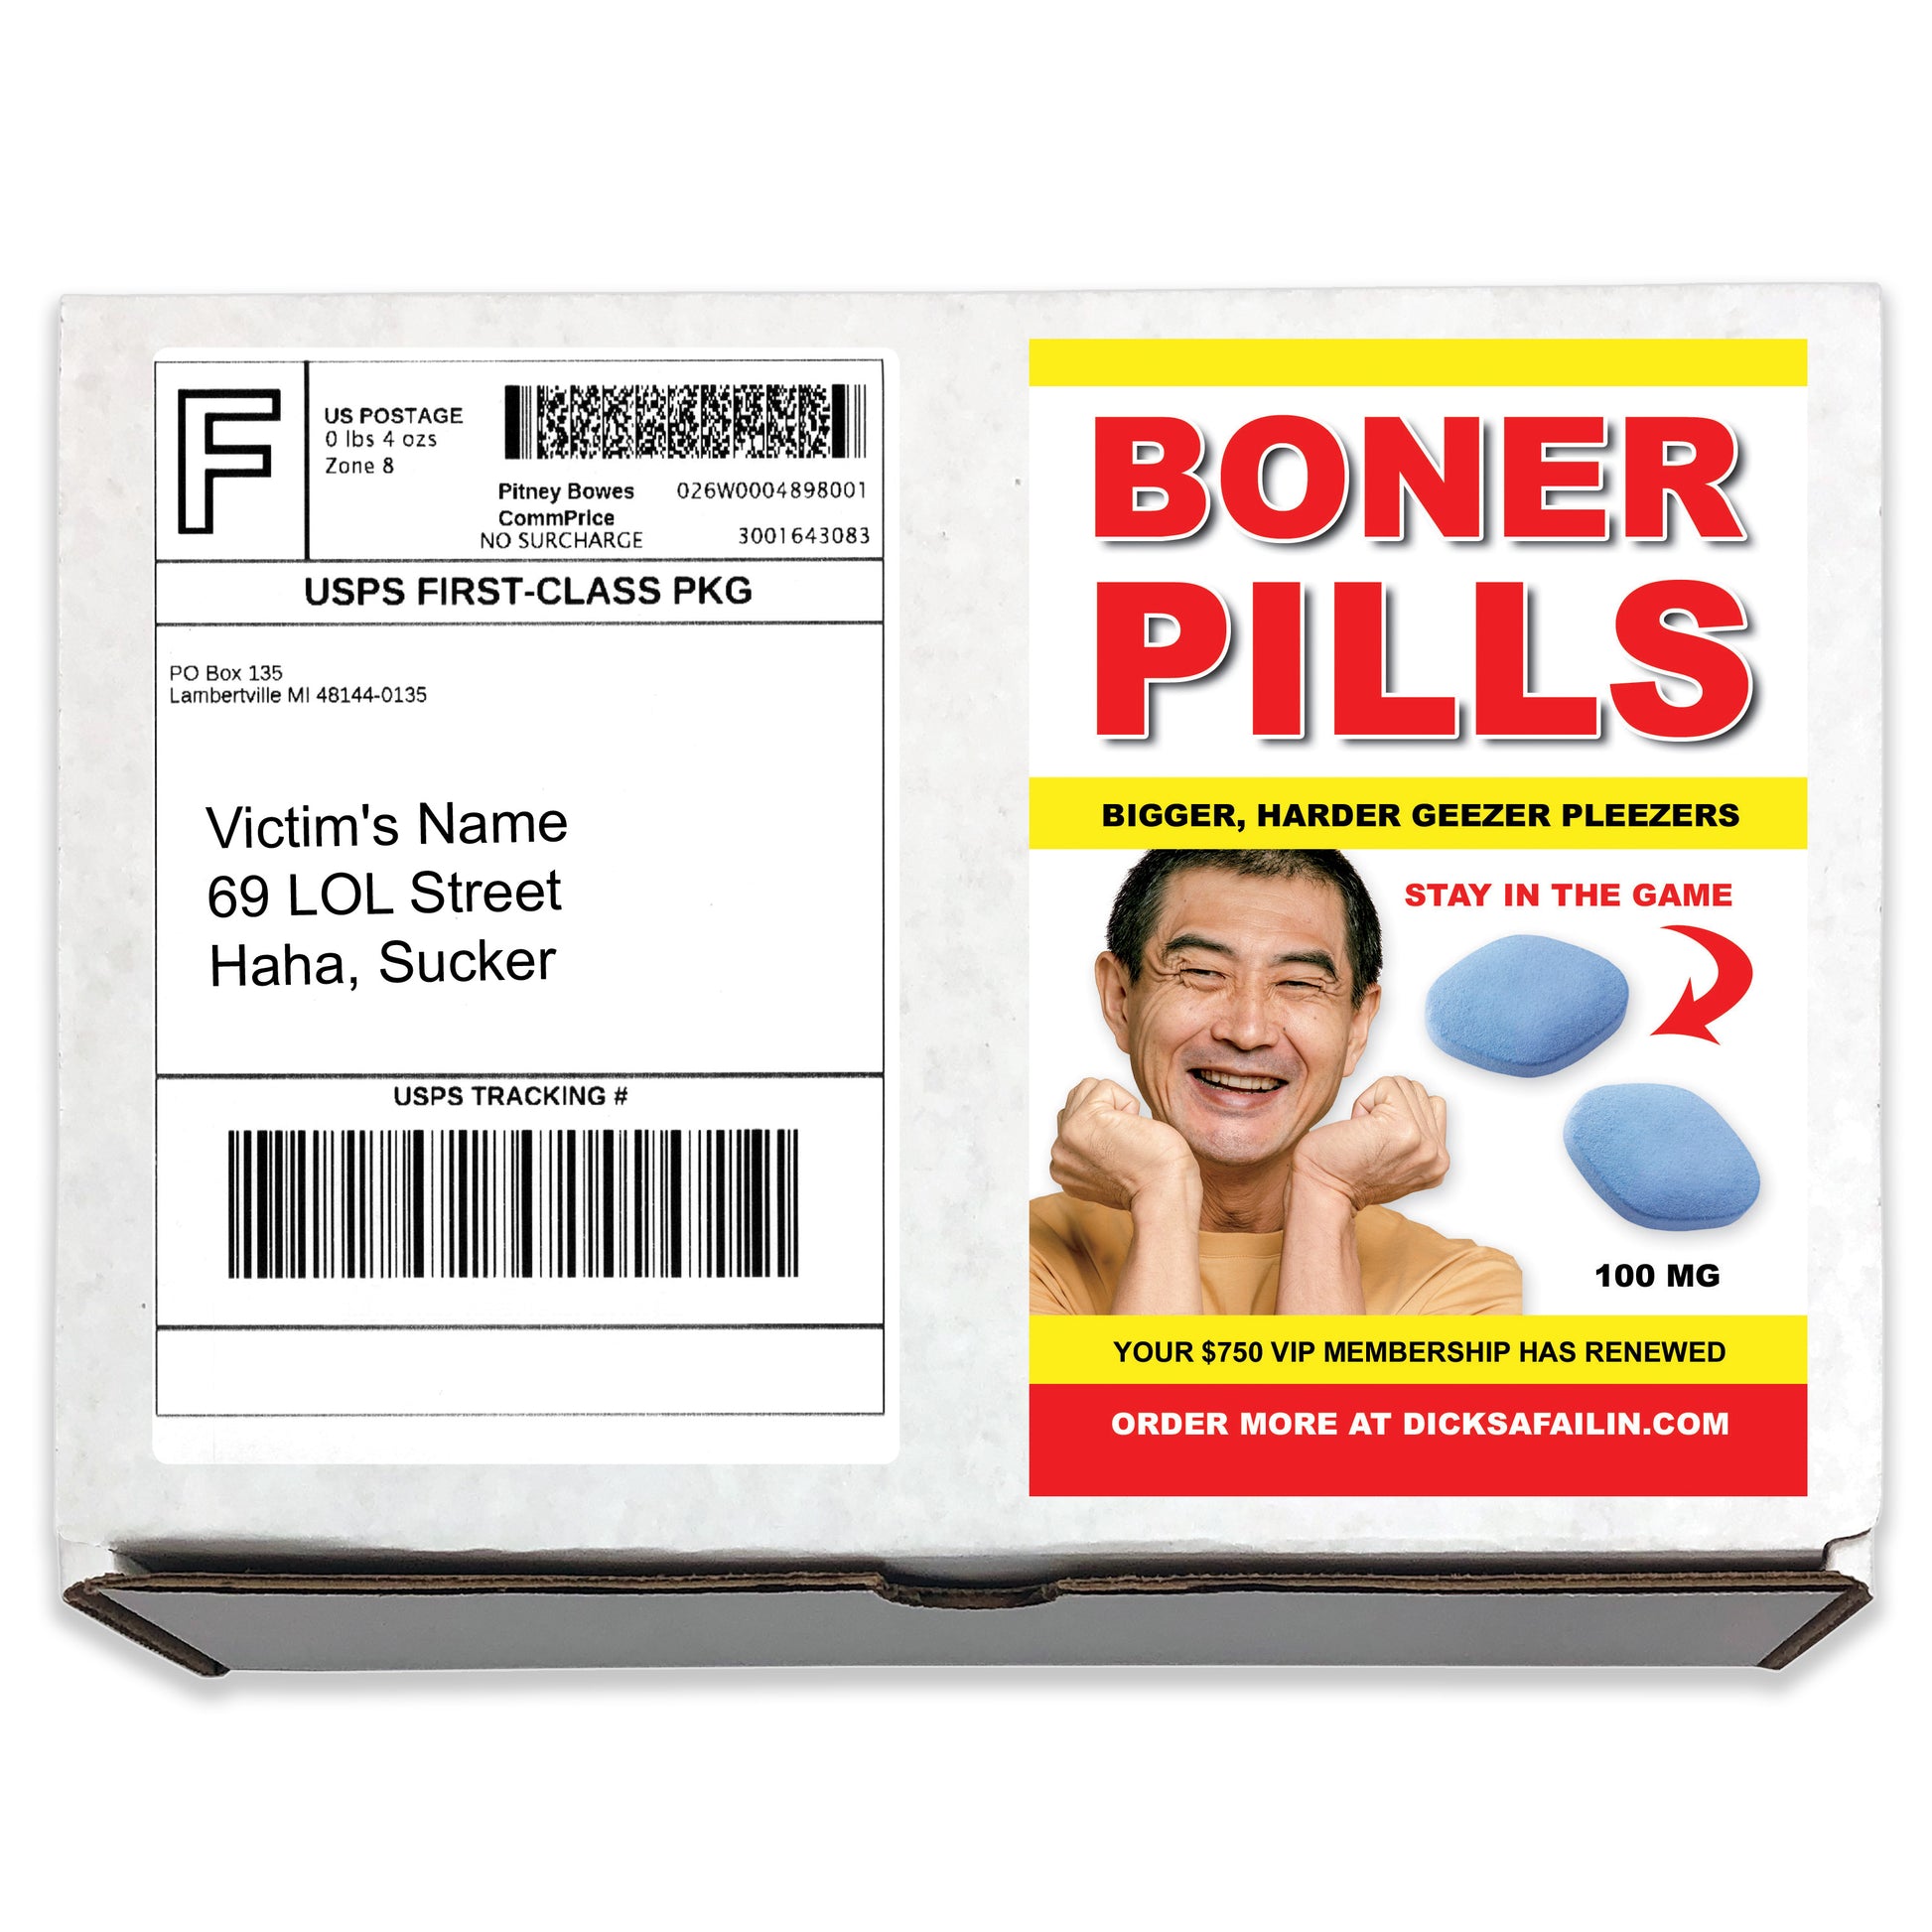 Boner Pills Funny Prank Mail